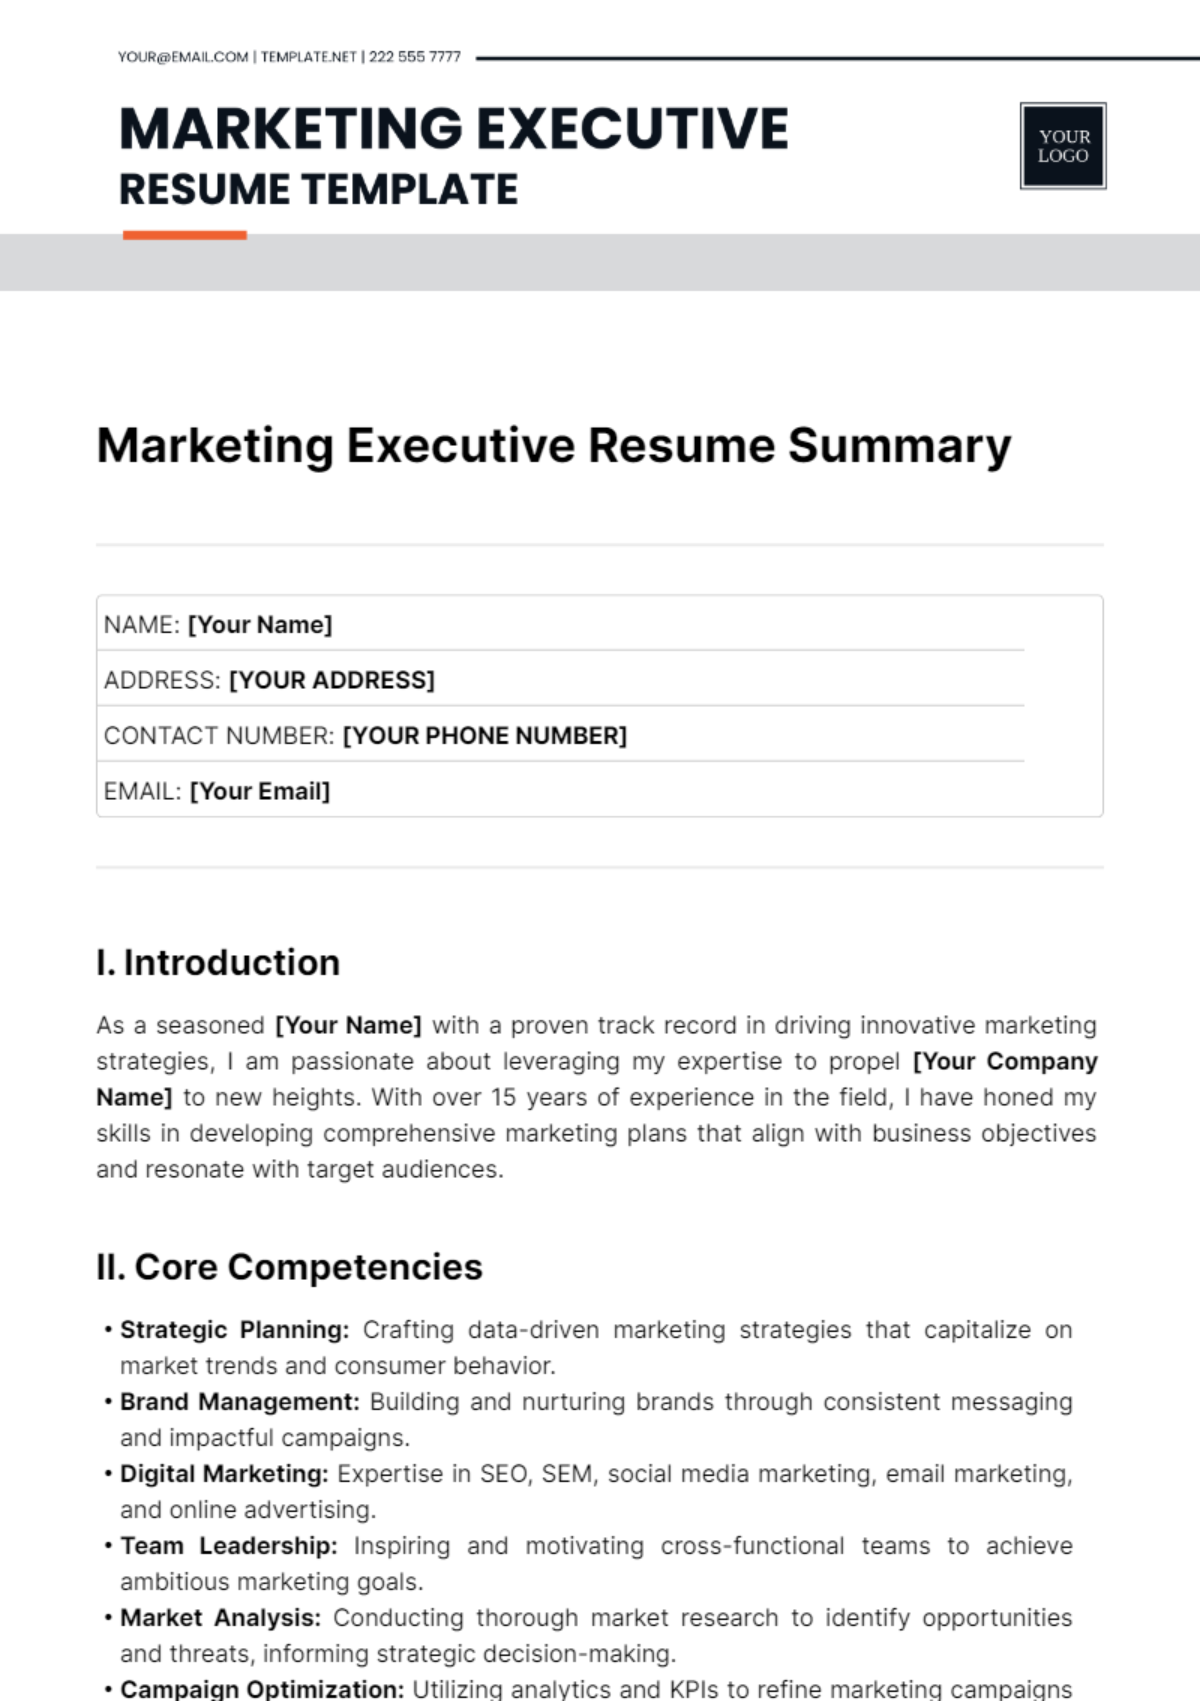 Free Marketing Executive Resume Summary Template